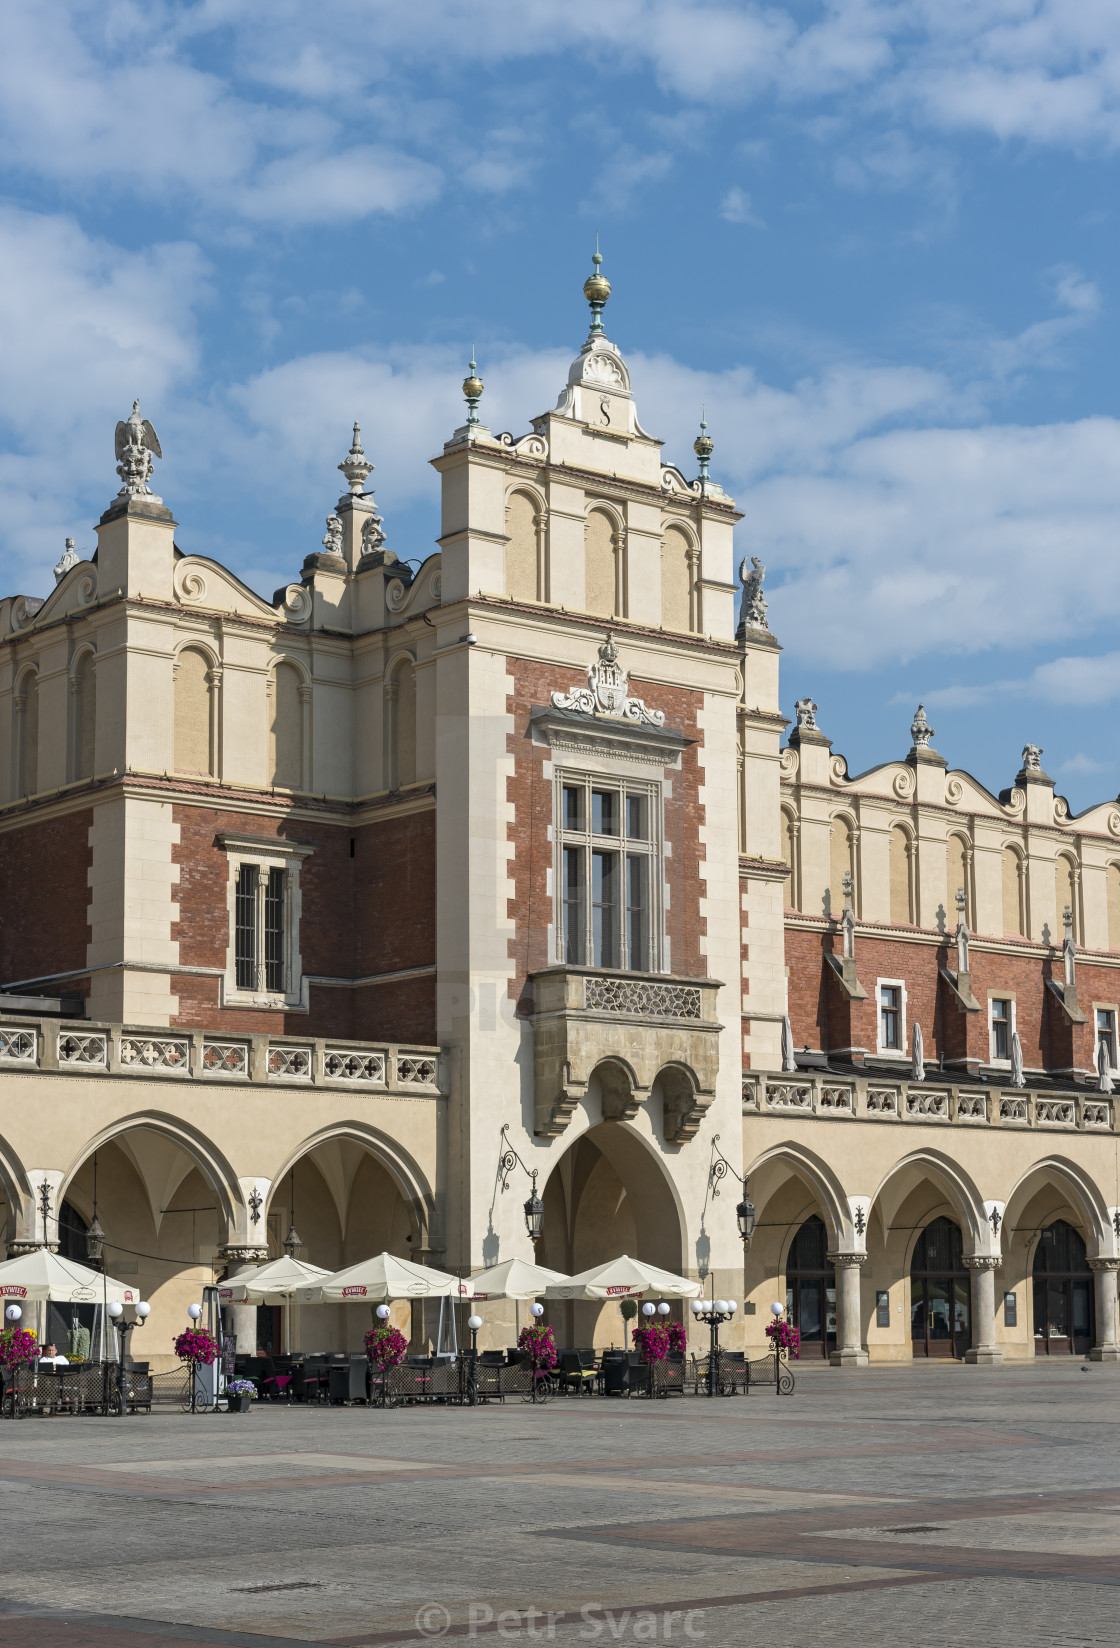 "Krakow Cloth Hall" stock image